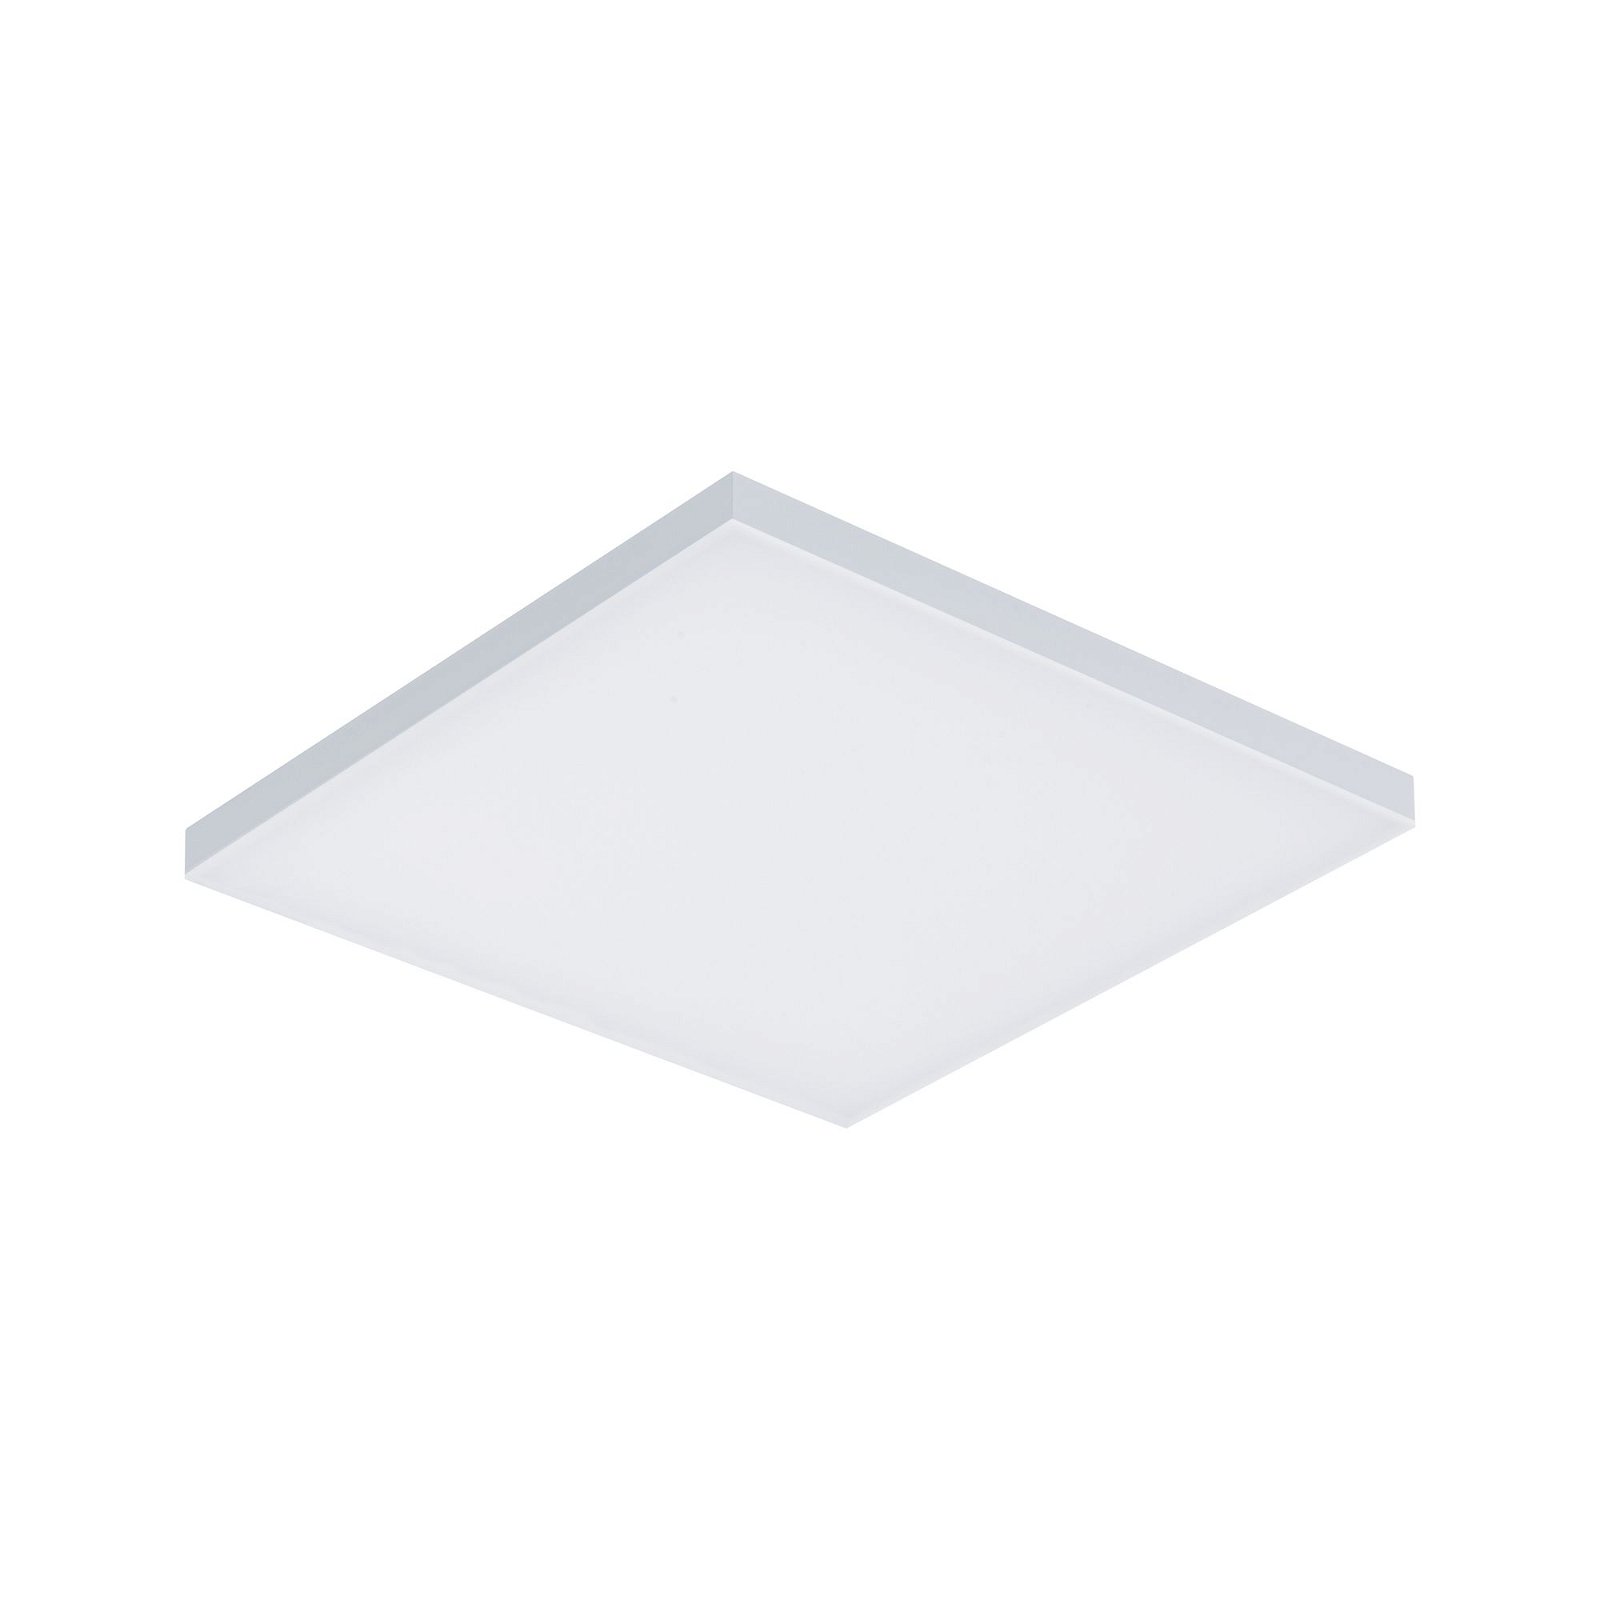 Panneau LED Smart Home Zigbee Velora carré 295x295mm Tunable White Blanc dépoli gradable